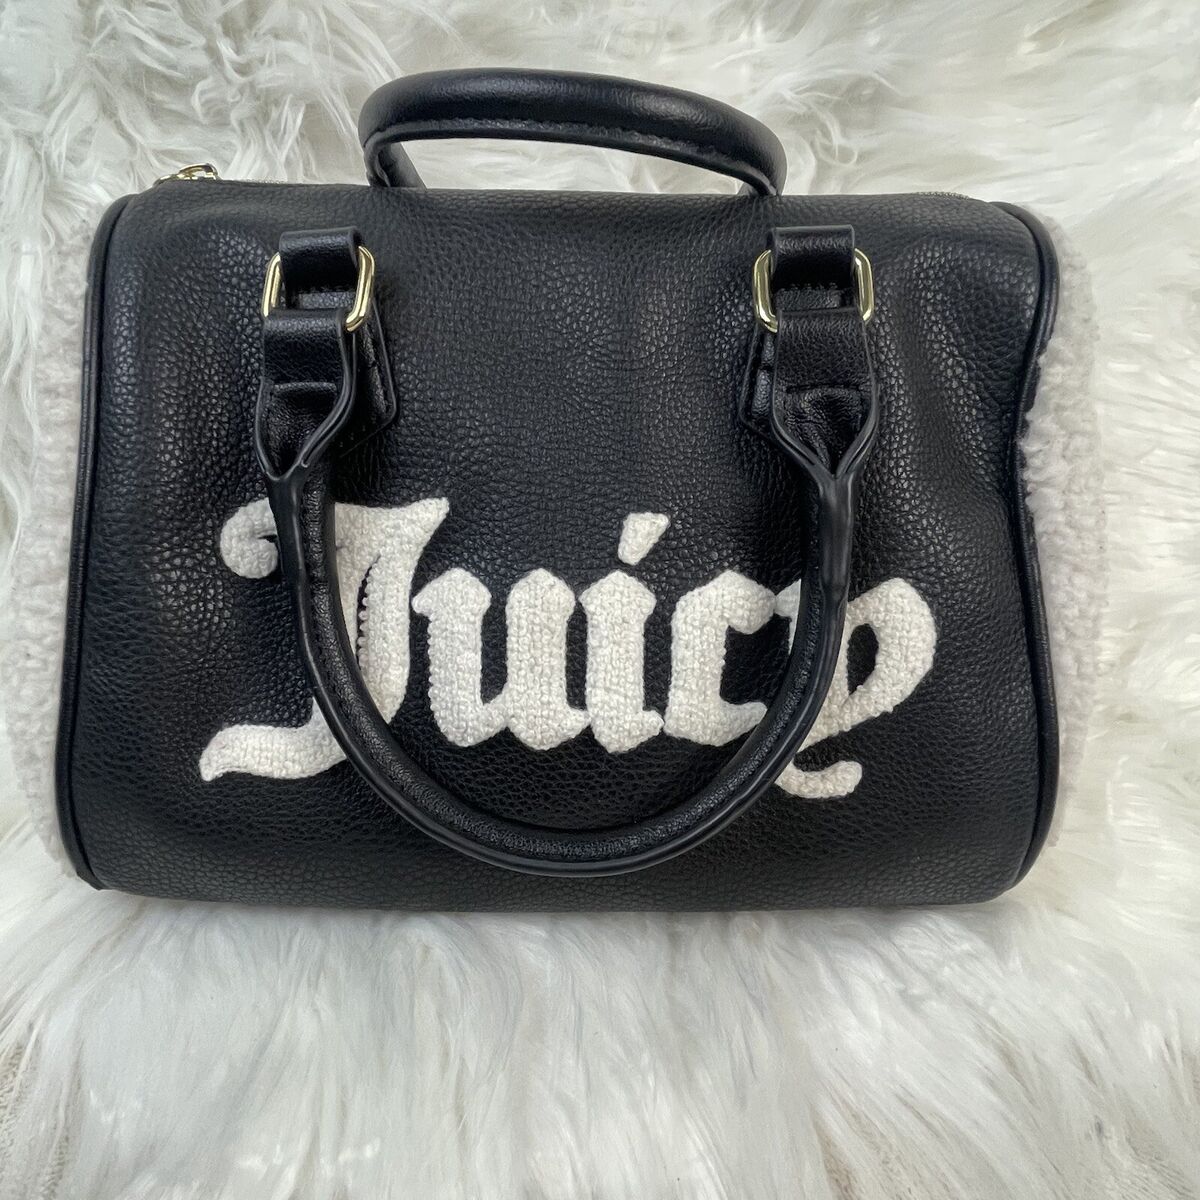 juicy couture speedy bag